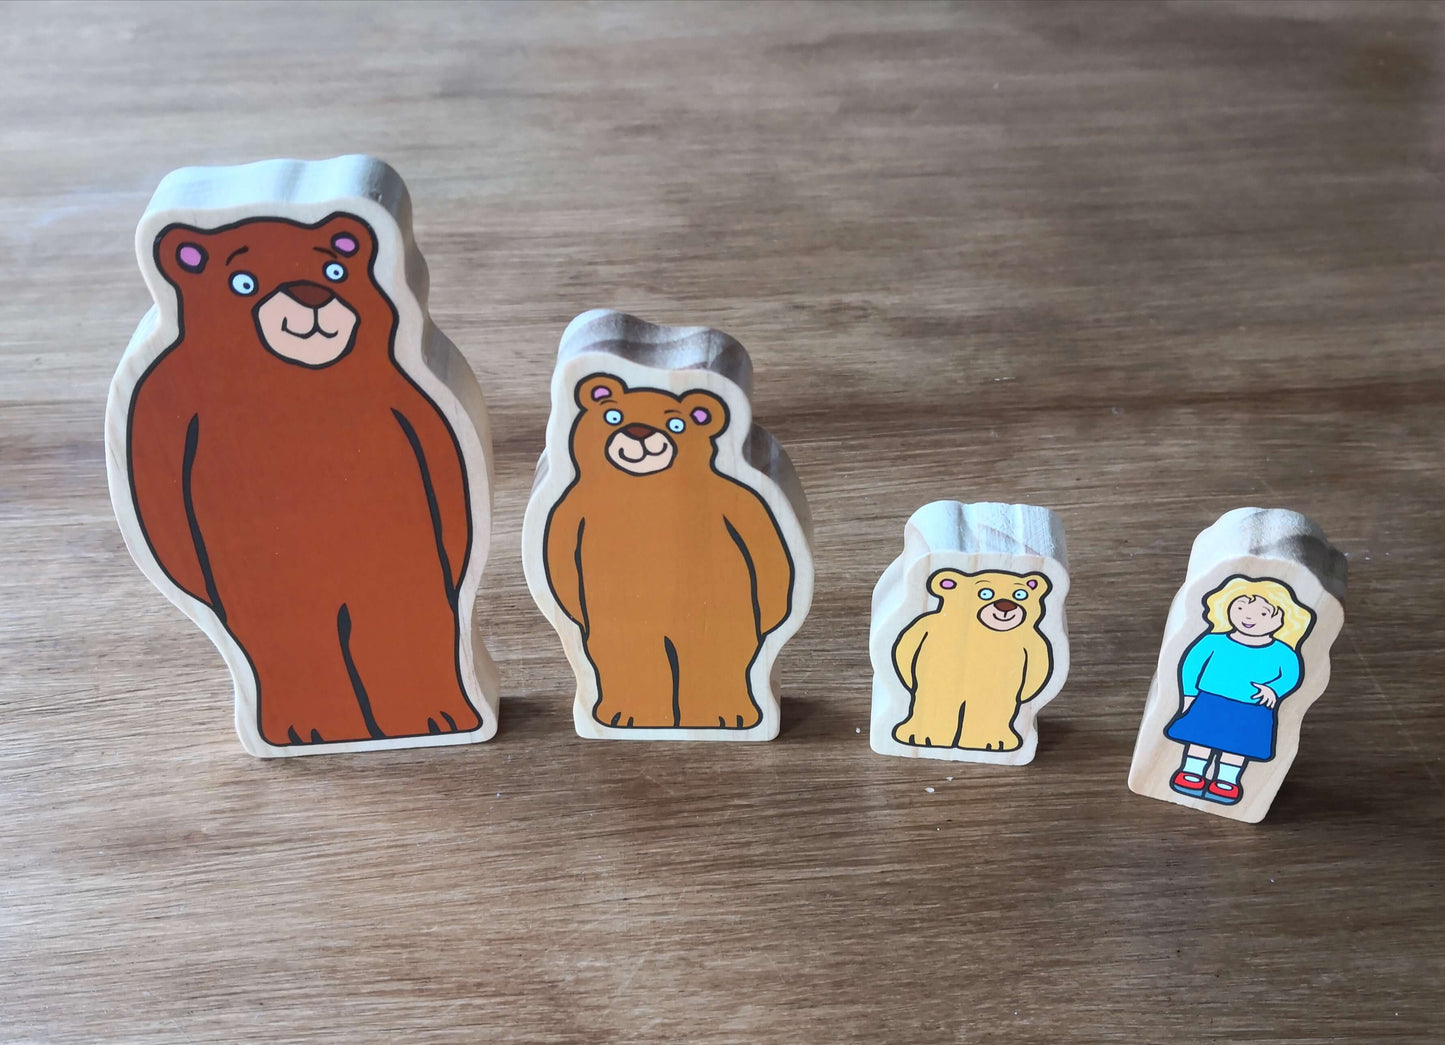 Goldilocks and the three bears characters